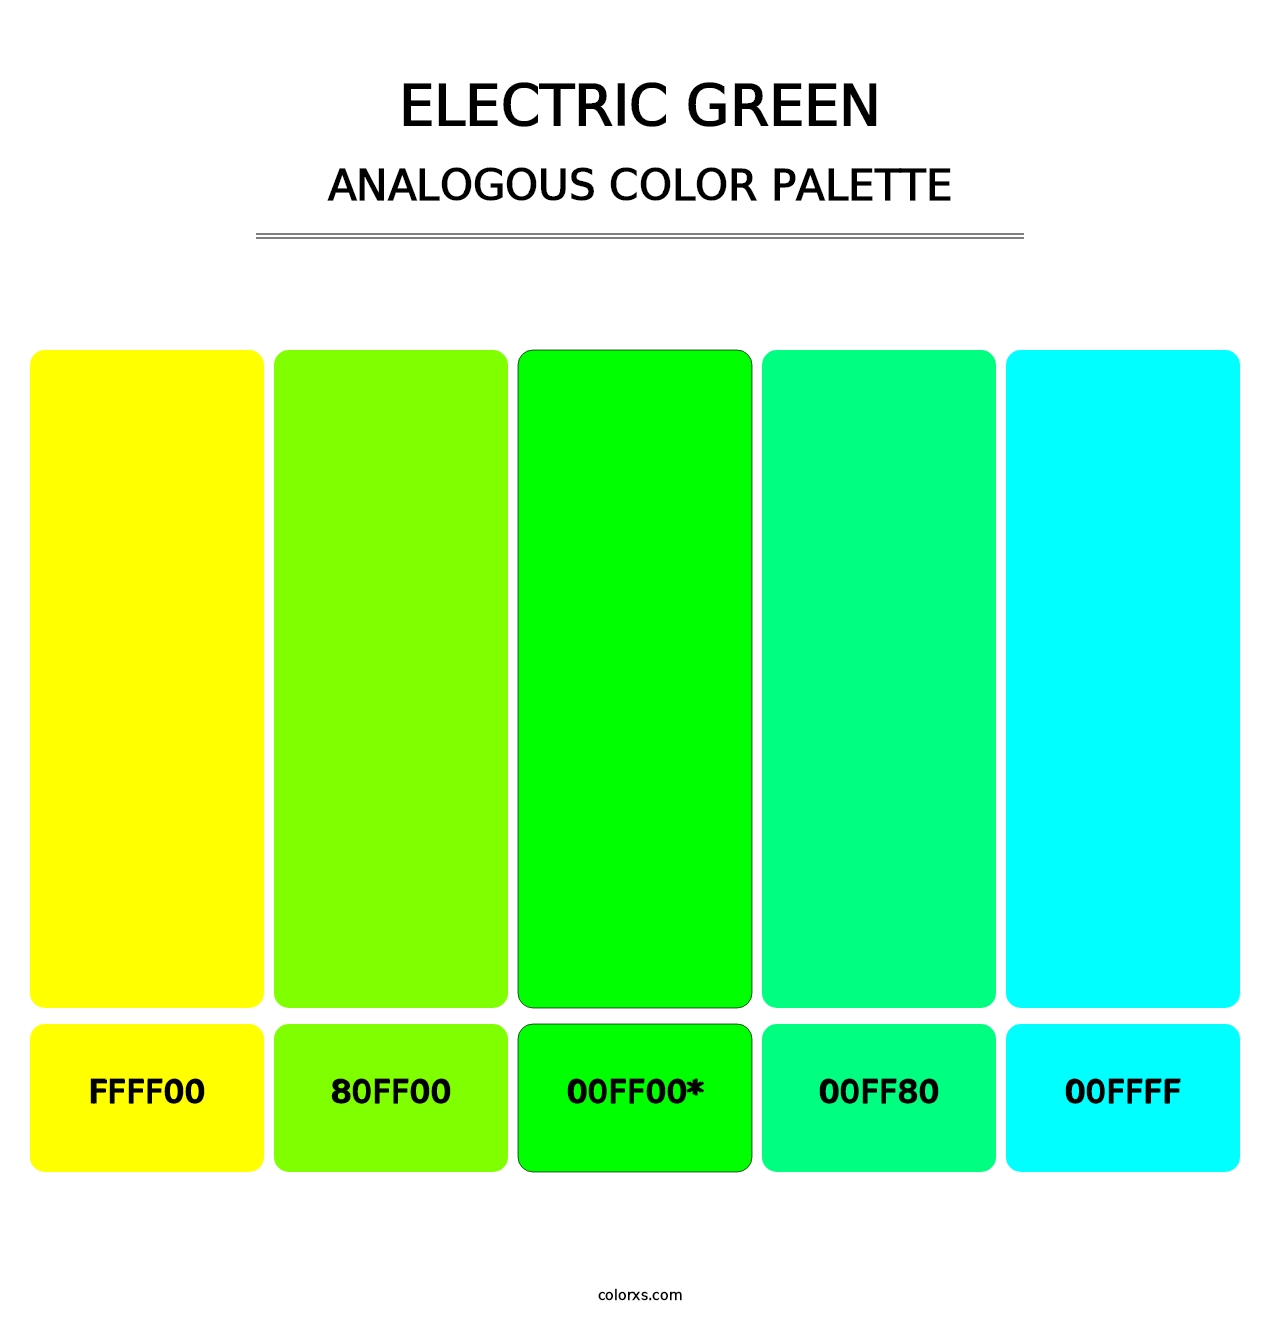 Electric Green - Analogous Color Palette